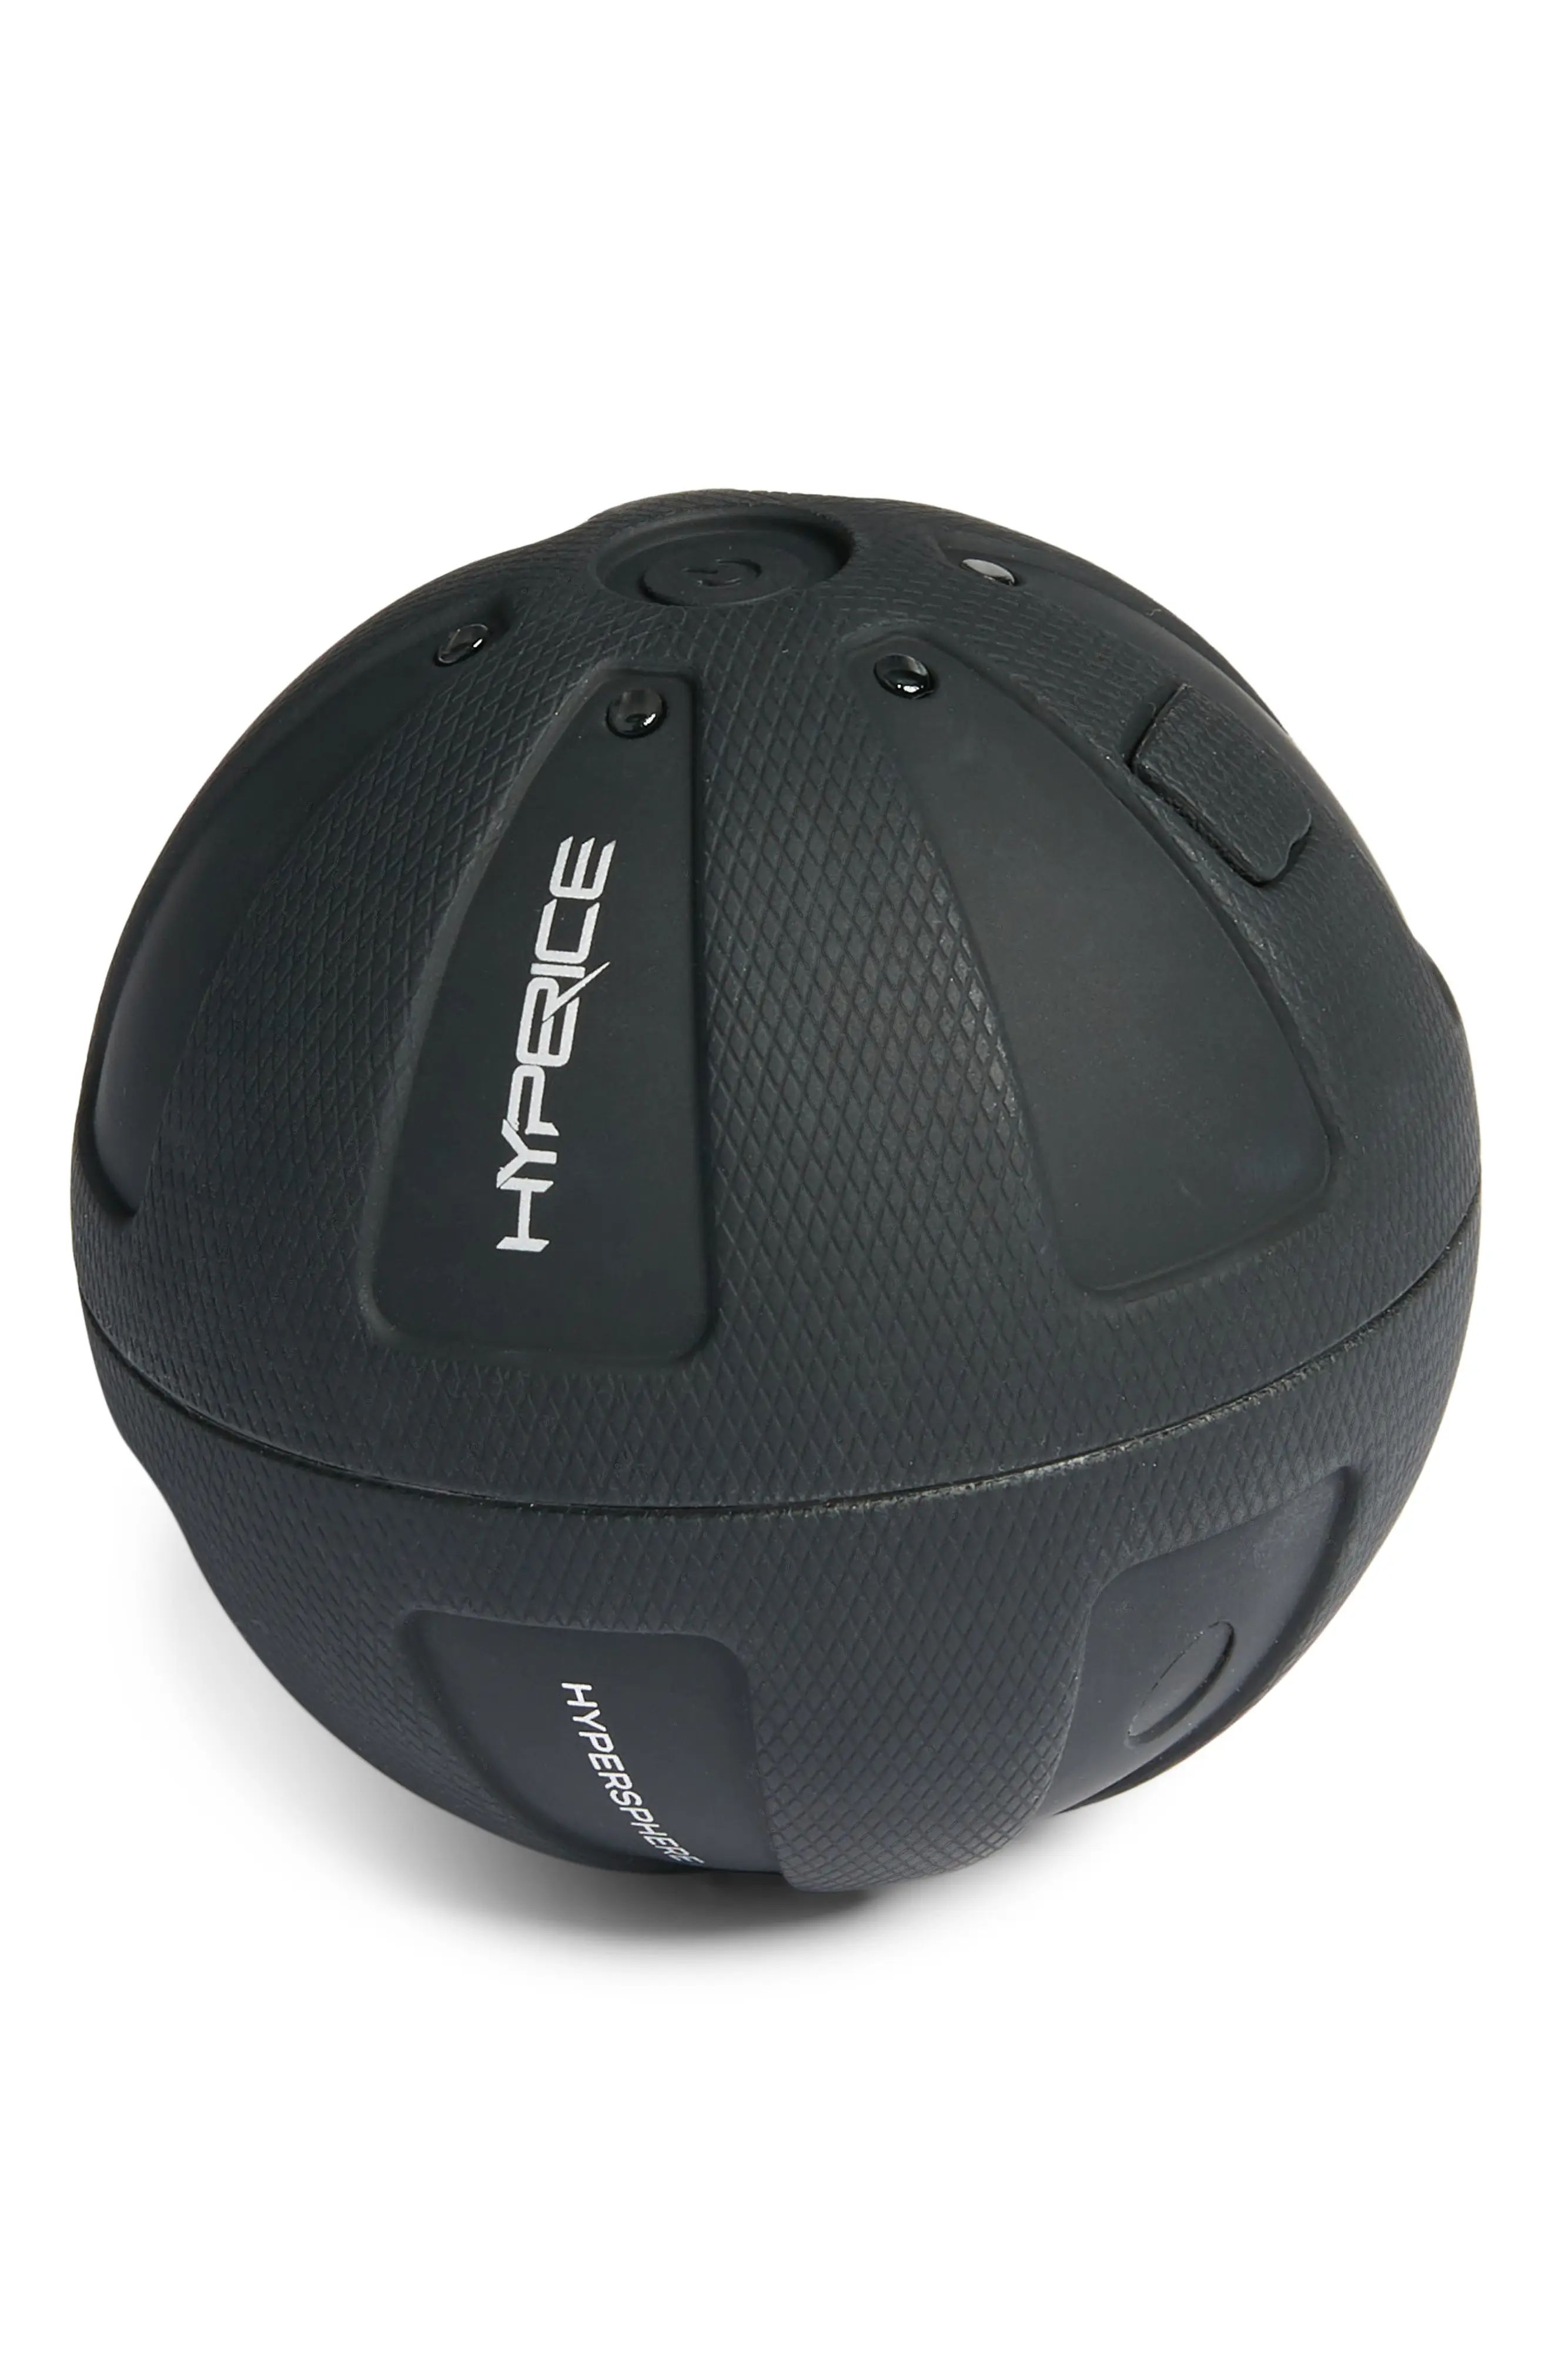 Hyperice Hypersphere Mini Vibrating Fitness Massage Ball, Size One Size - Black | Nordstrom